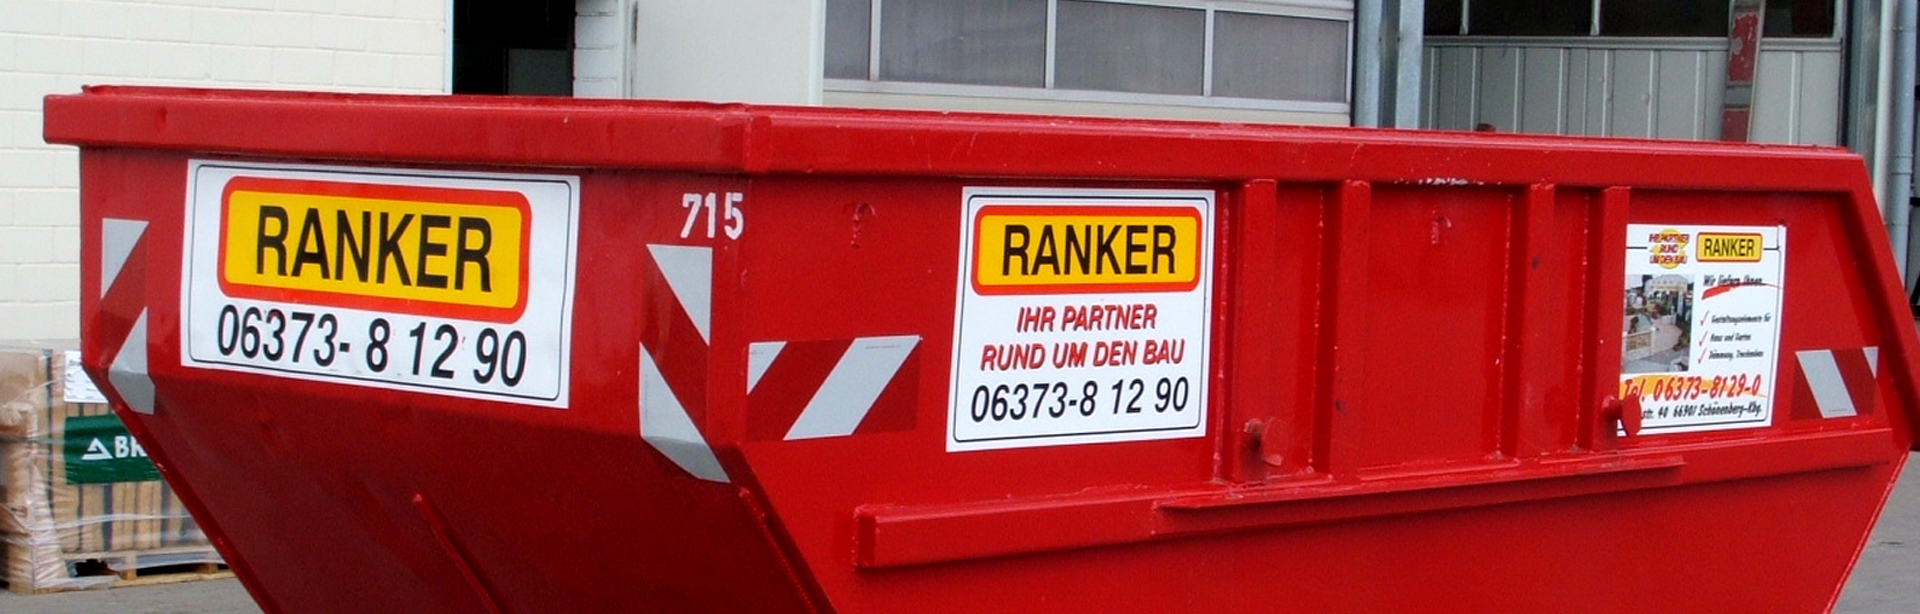 Ranker-GmbH-cont-gr-2.jpg